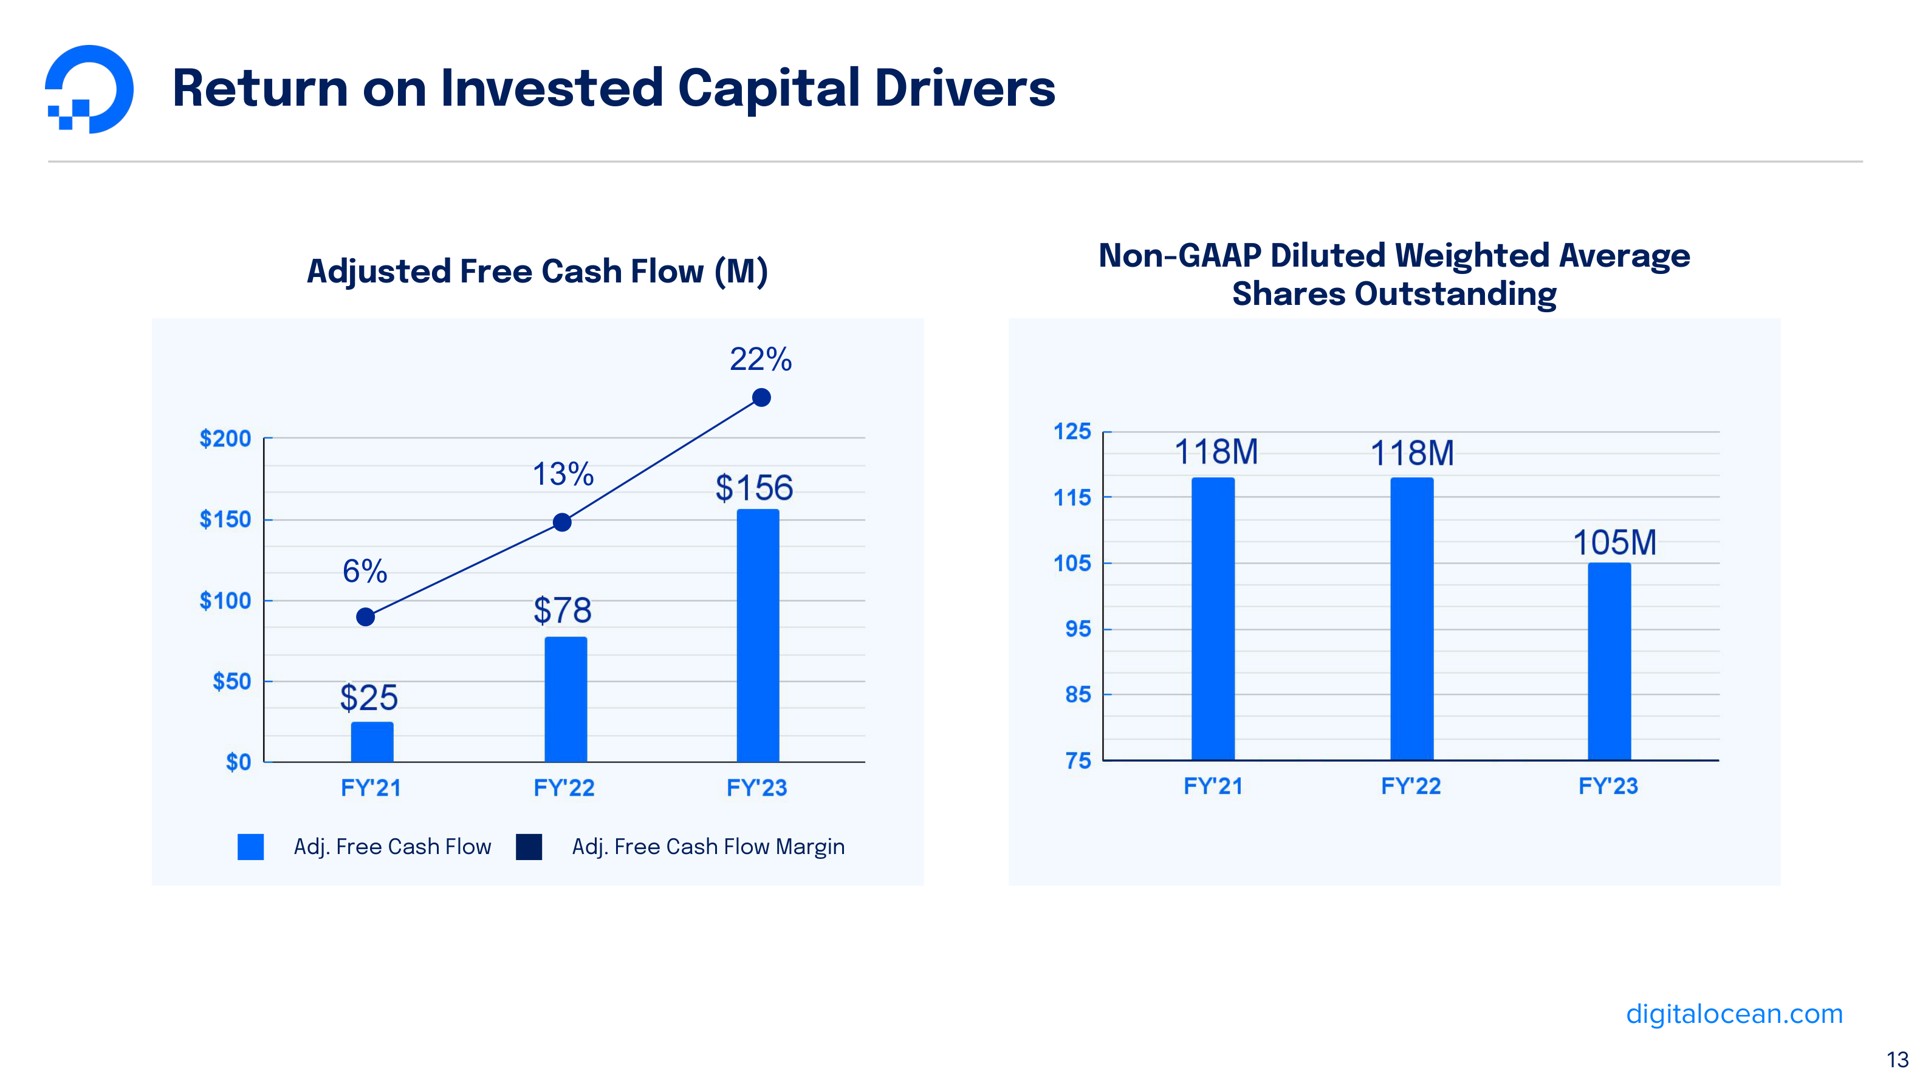 return on invested capital drivers | DigitalOcean